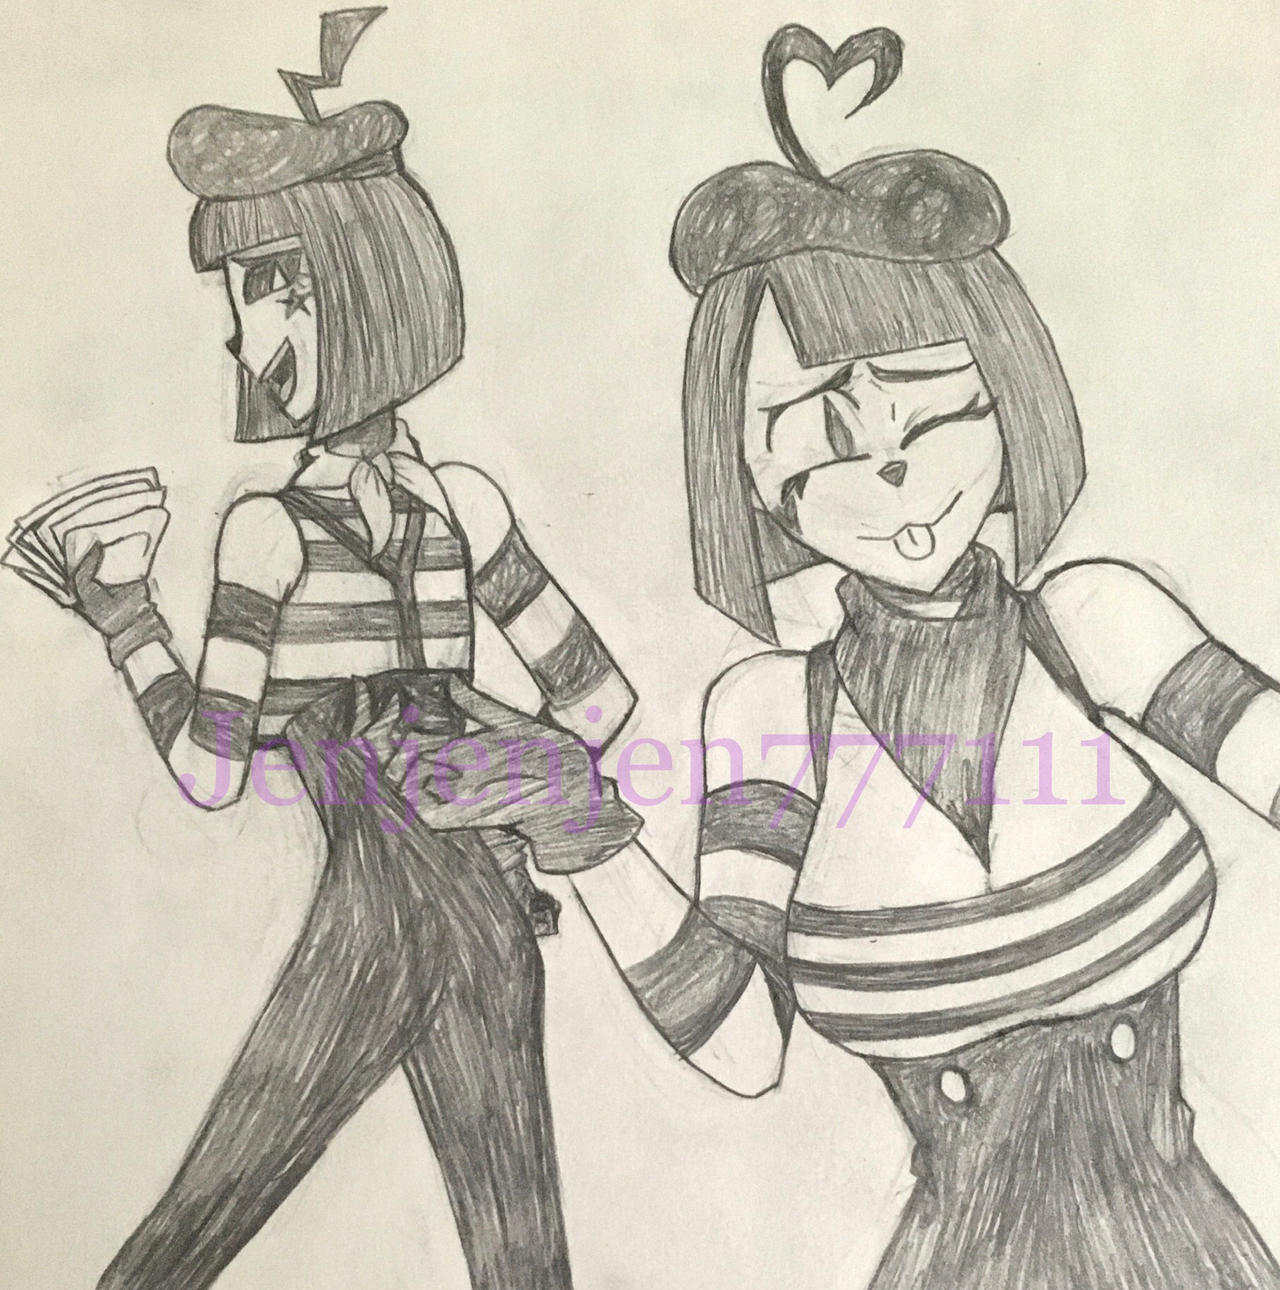 bonbon and chuchu (mime and dash) drawn by derpixon